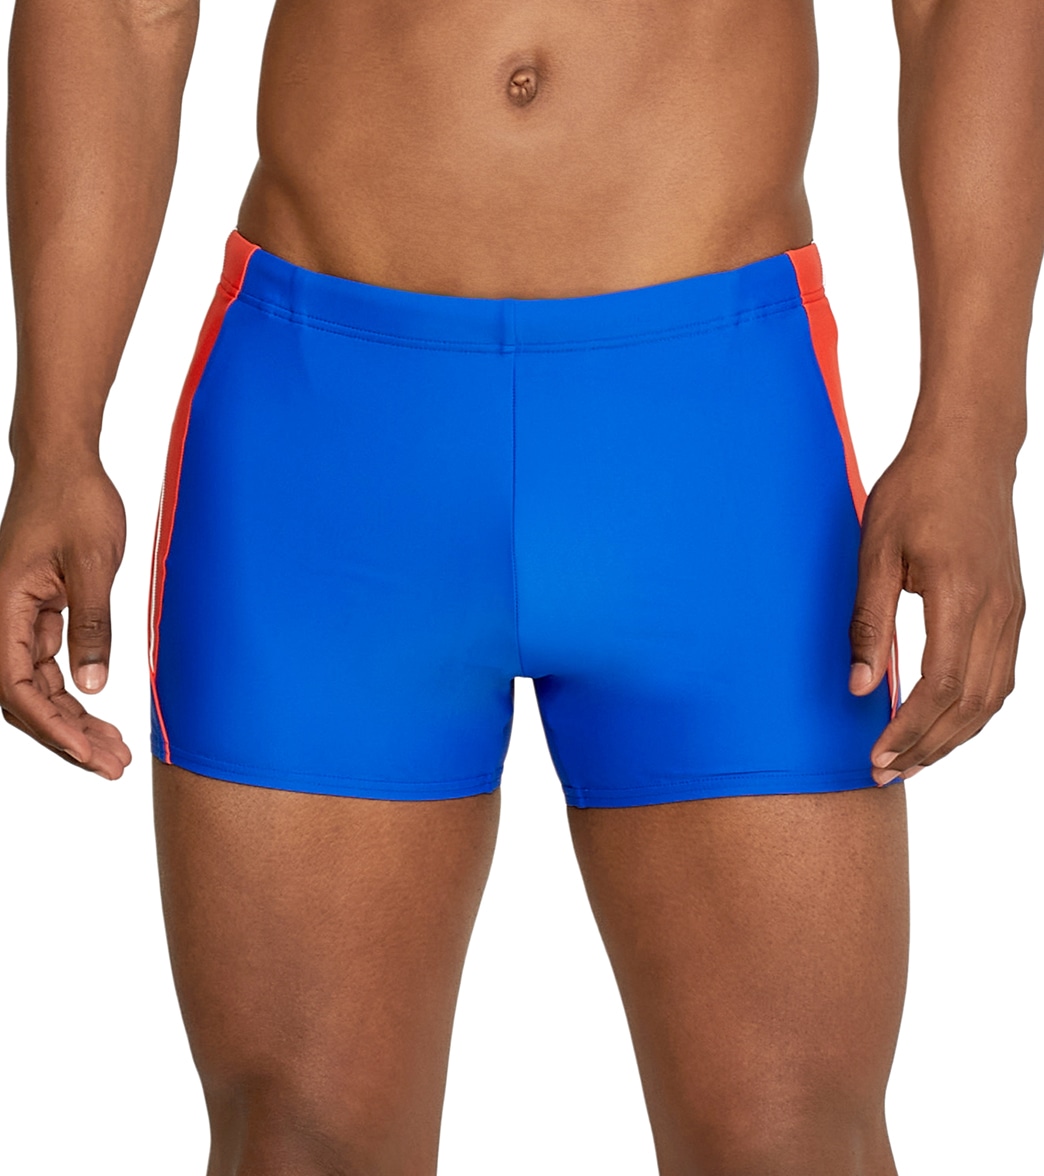 Speedo Men's Fitness Splice Square Leg Swimsuit - Spicy Orange Small - Swimoutlet.com